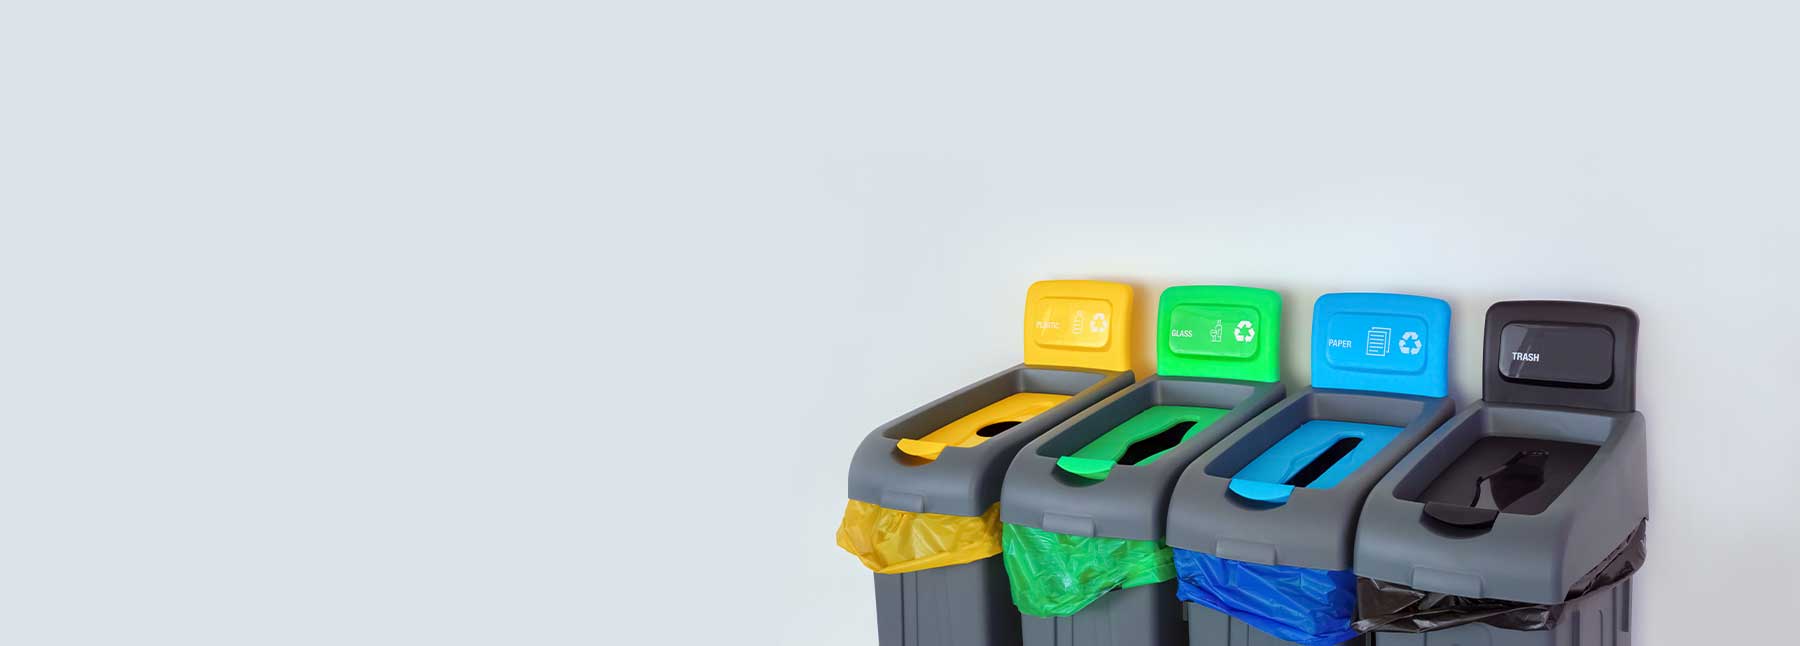 Categorised recycling bins 